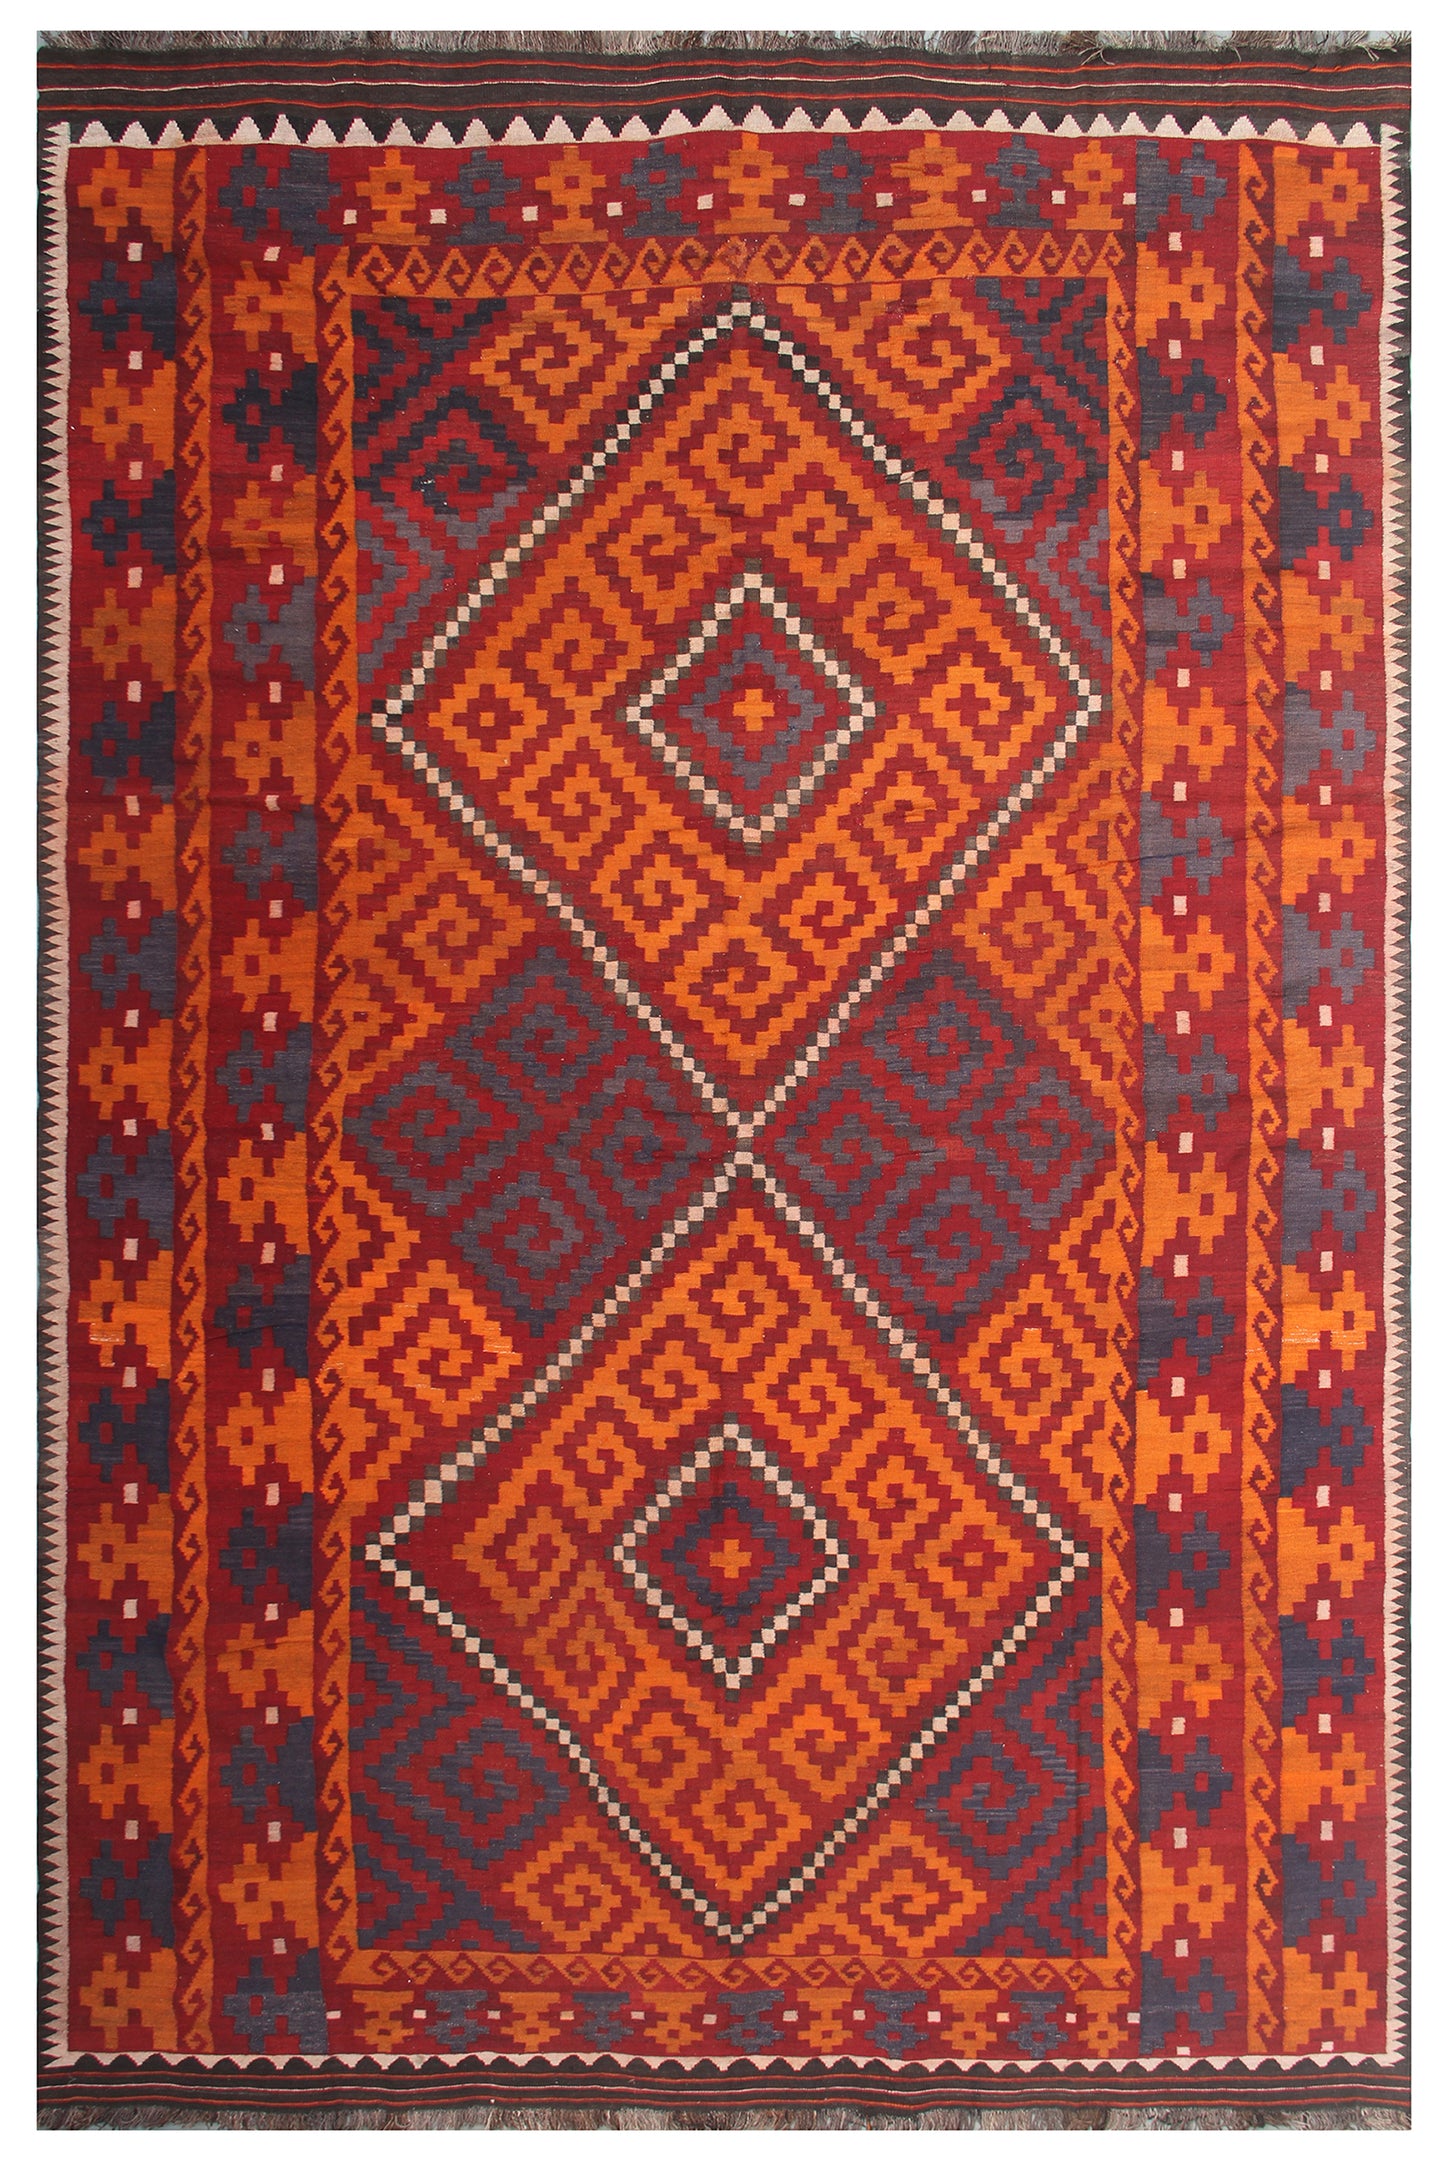 10'x16' Large Orange, Blue and Red Tribal Vintage Large Afghan Maimana Kilim